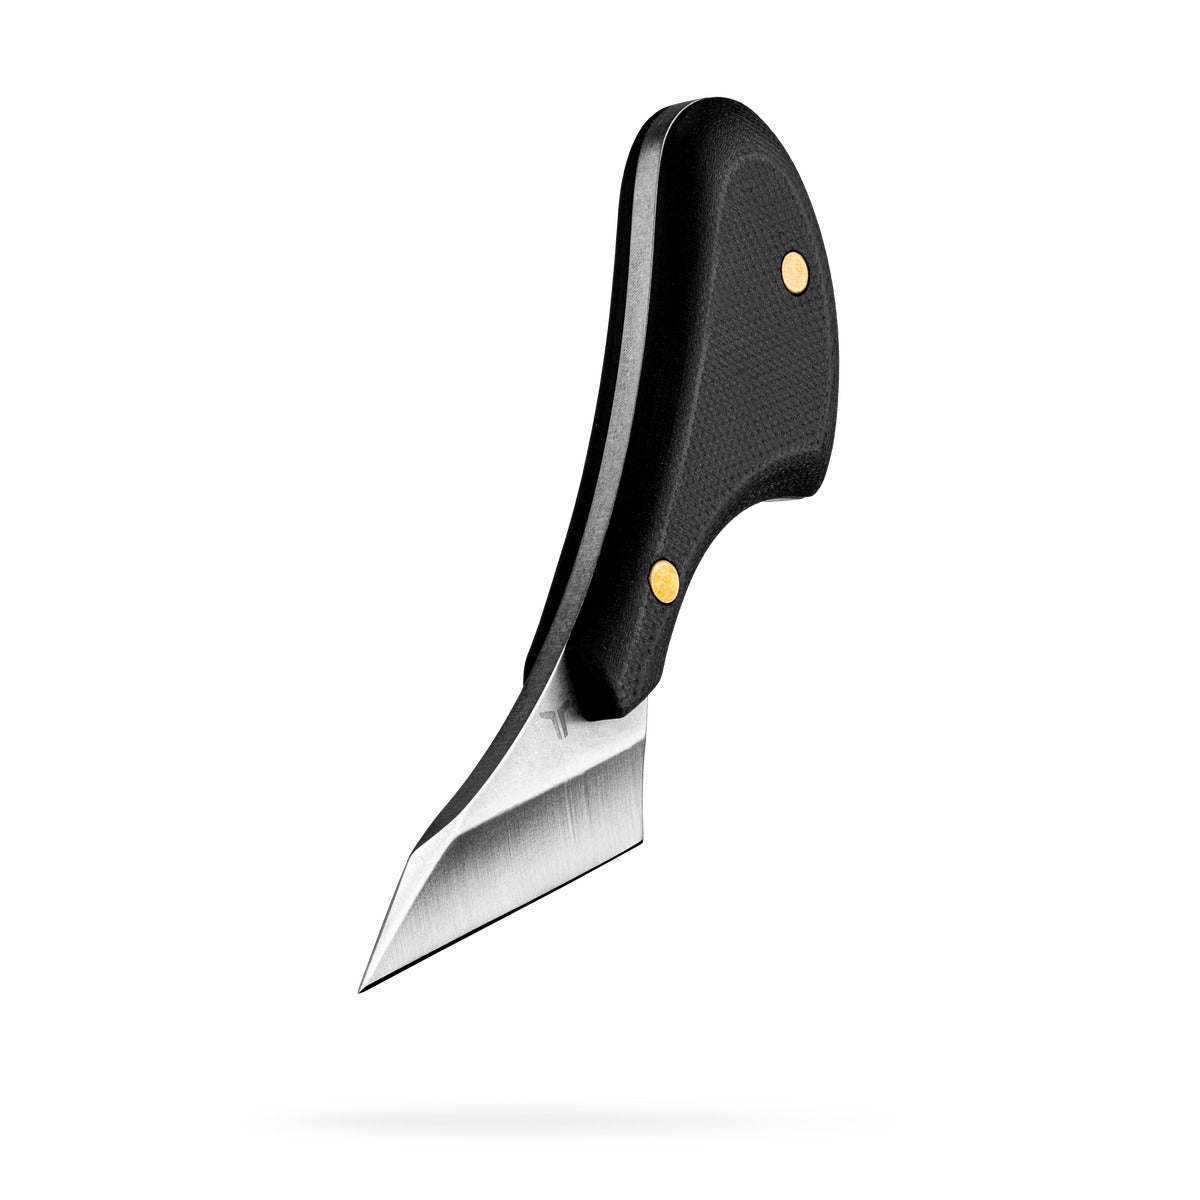 True Mycro Knife - The Tool Store